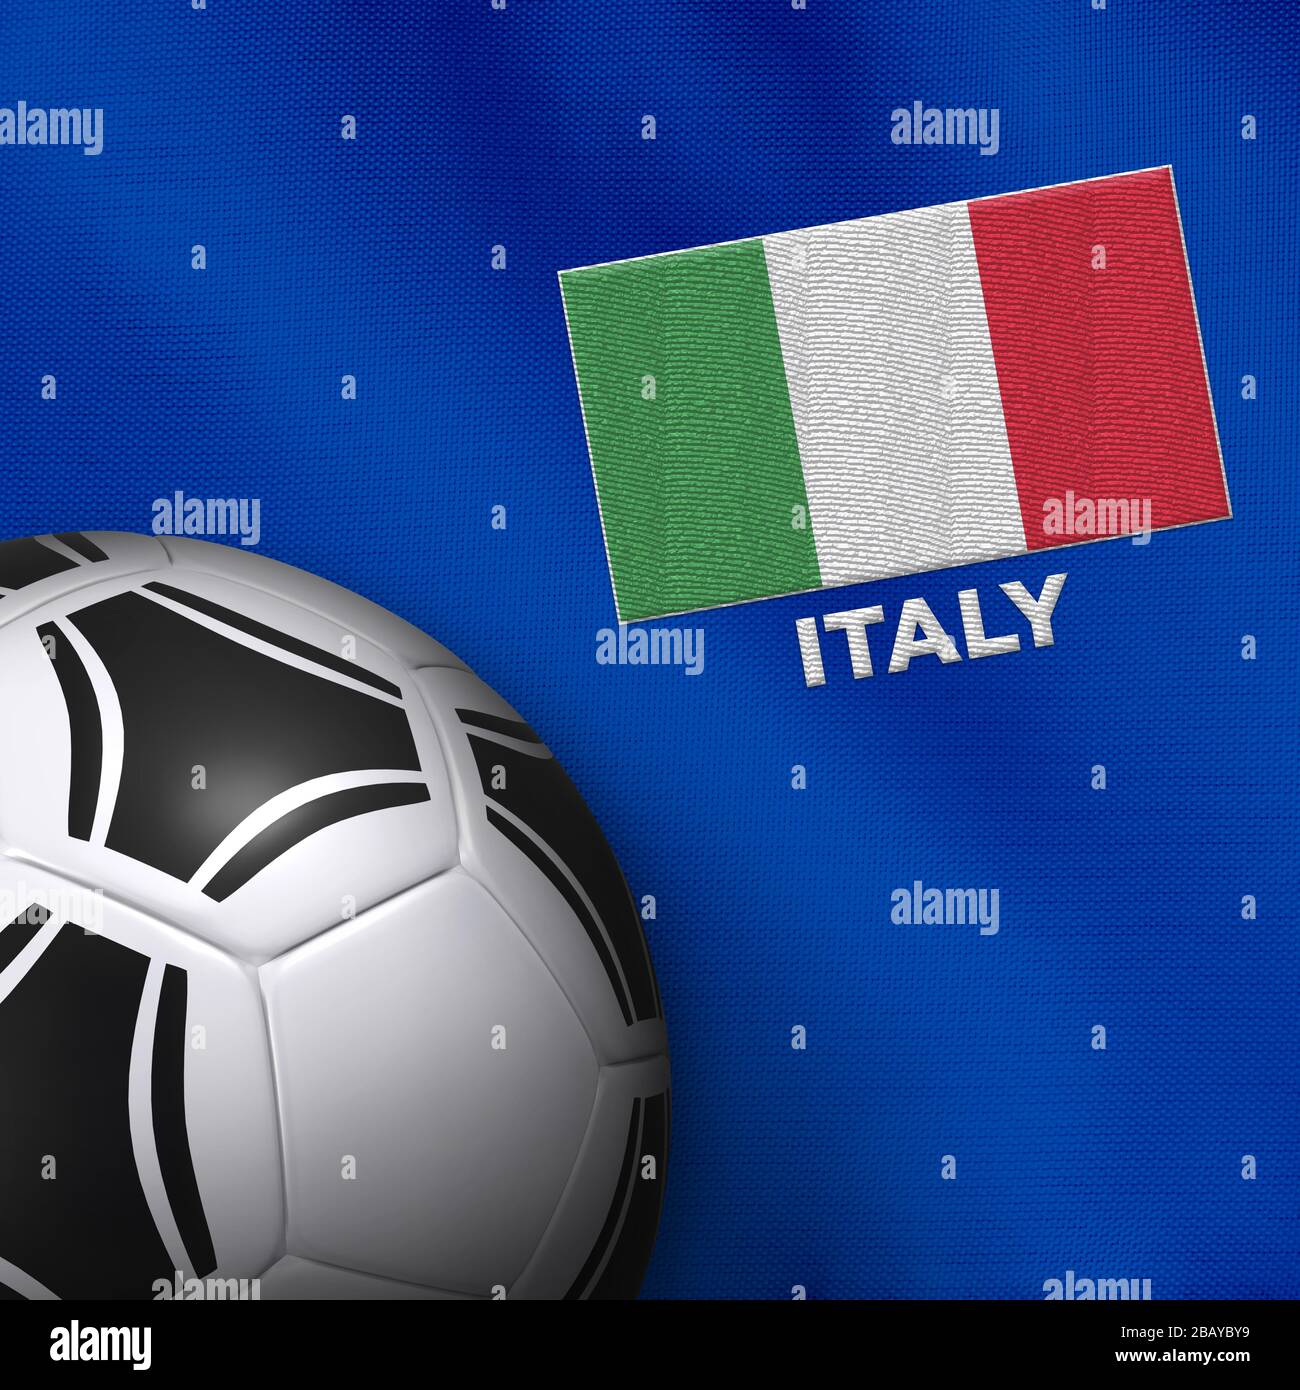 Fußball- und Nationalmannschaftstrikot Italiens. Stockfoto